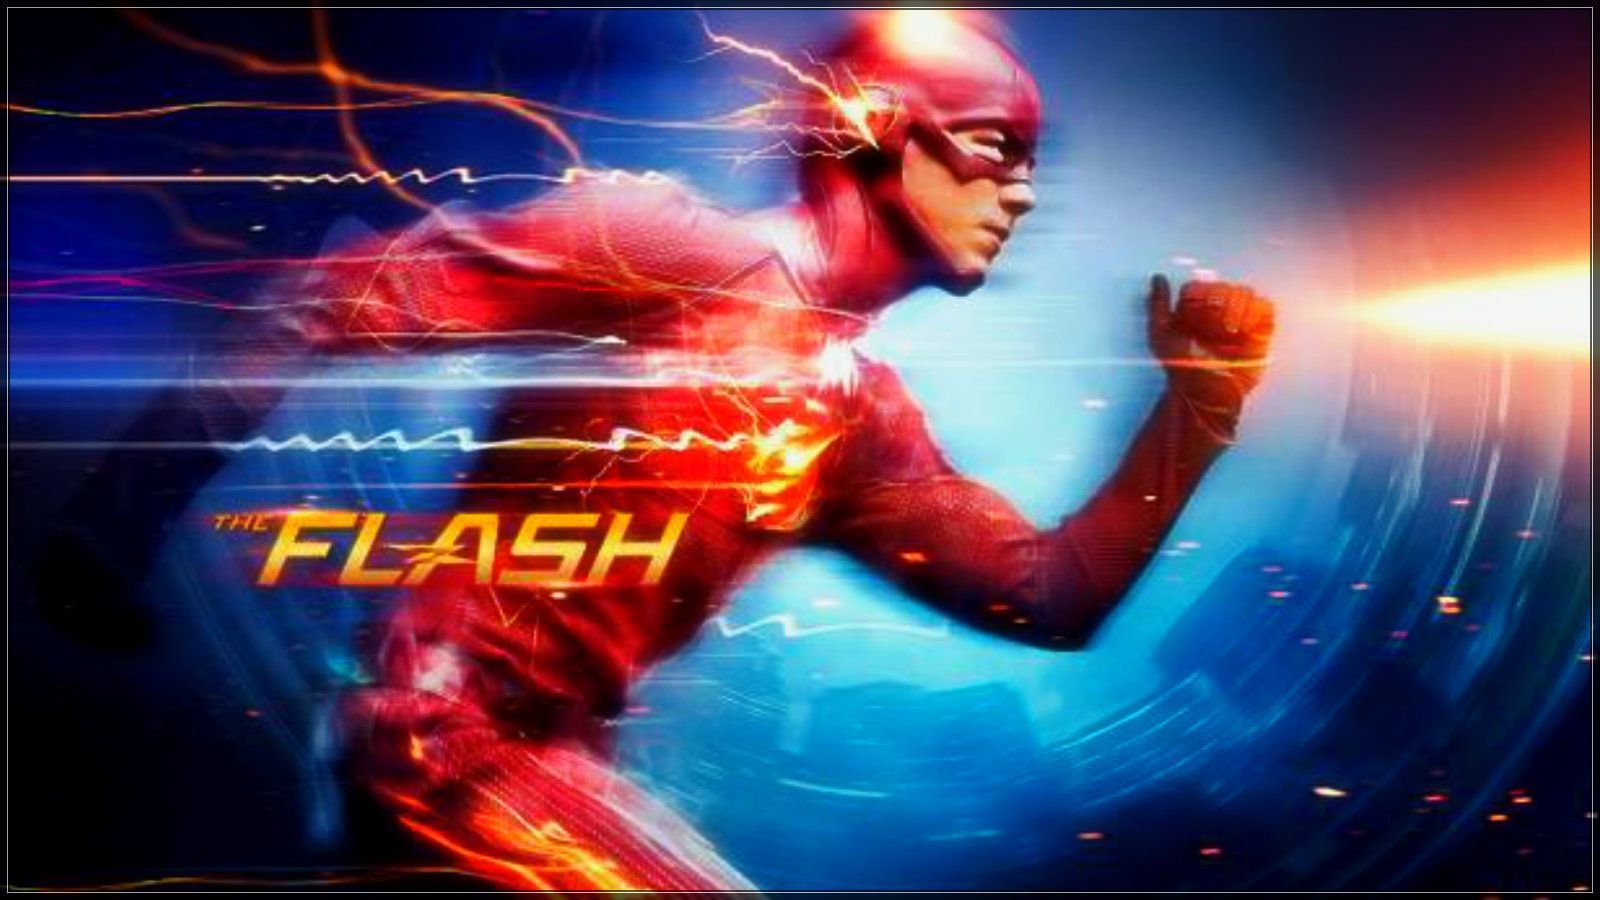 The Flash - The Flash CW Wallpaper 37656140 - Fanpop